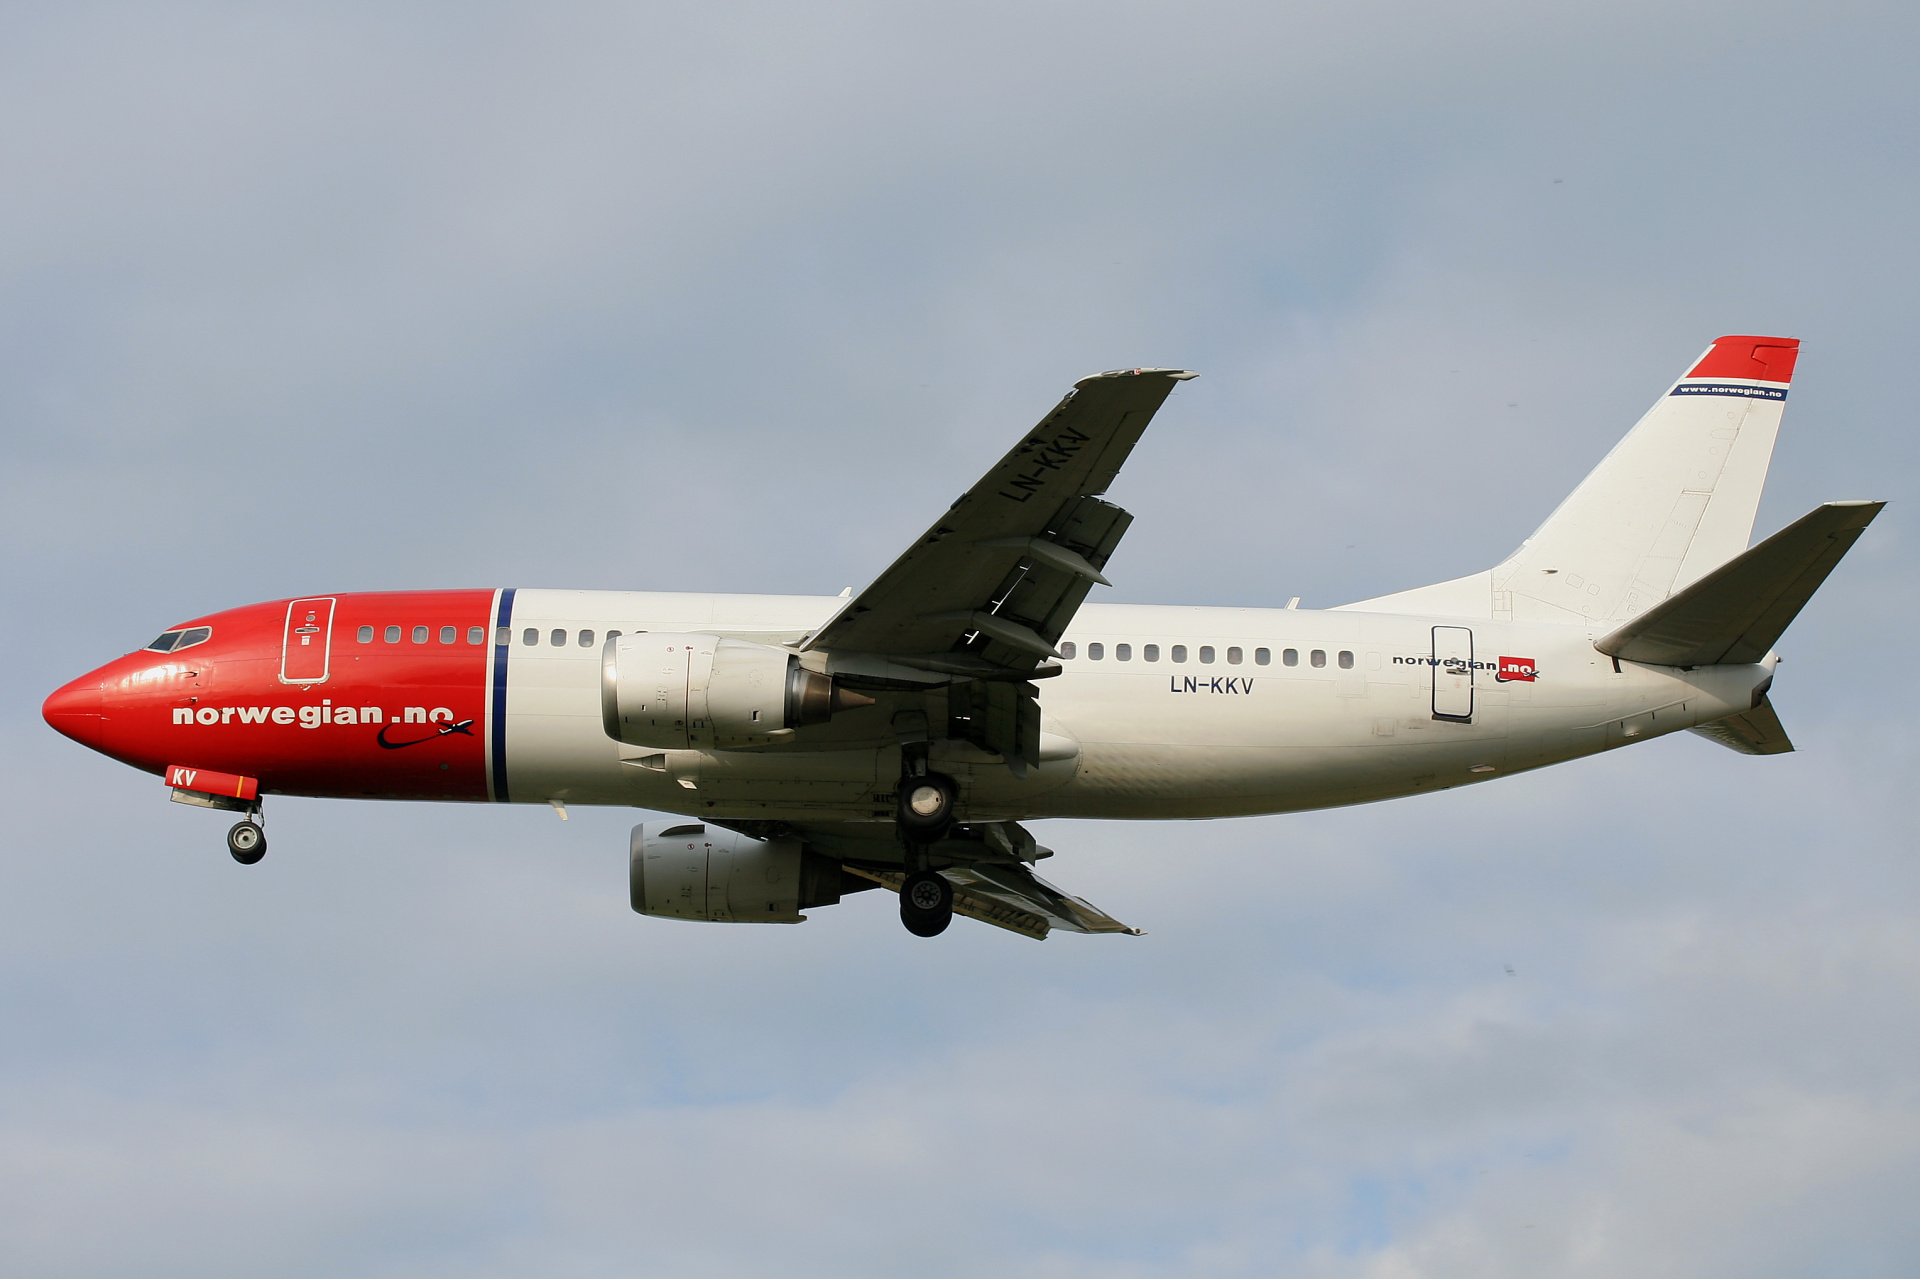 LN-KKV (Aircraft » EPWA Spotting » Boeing 737-300 » Norwegian Air Shuttle)